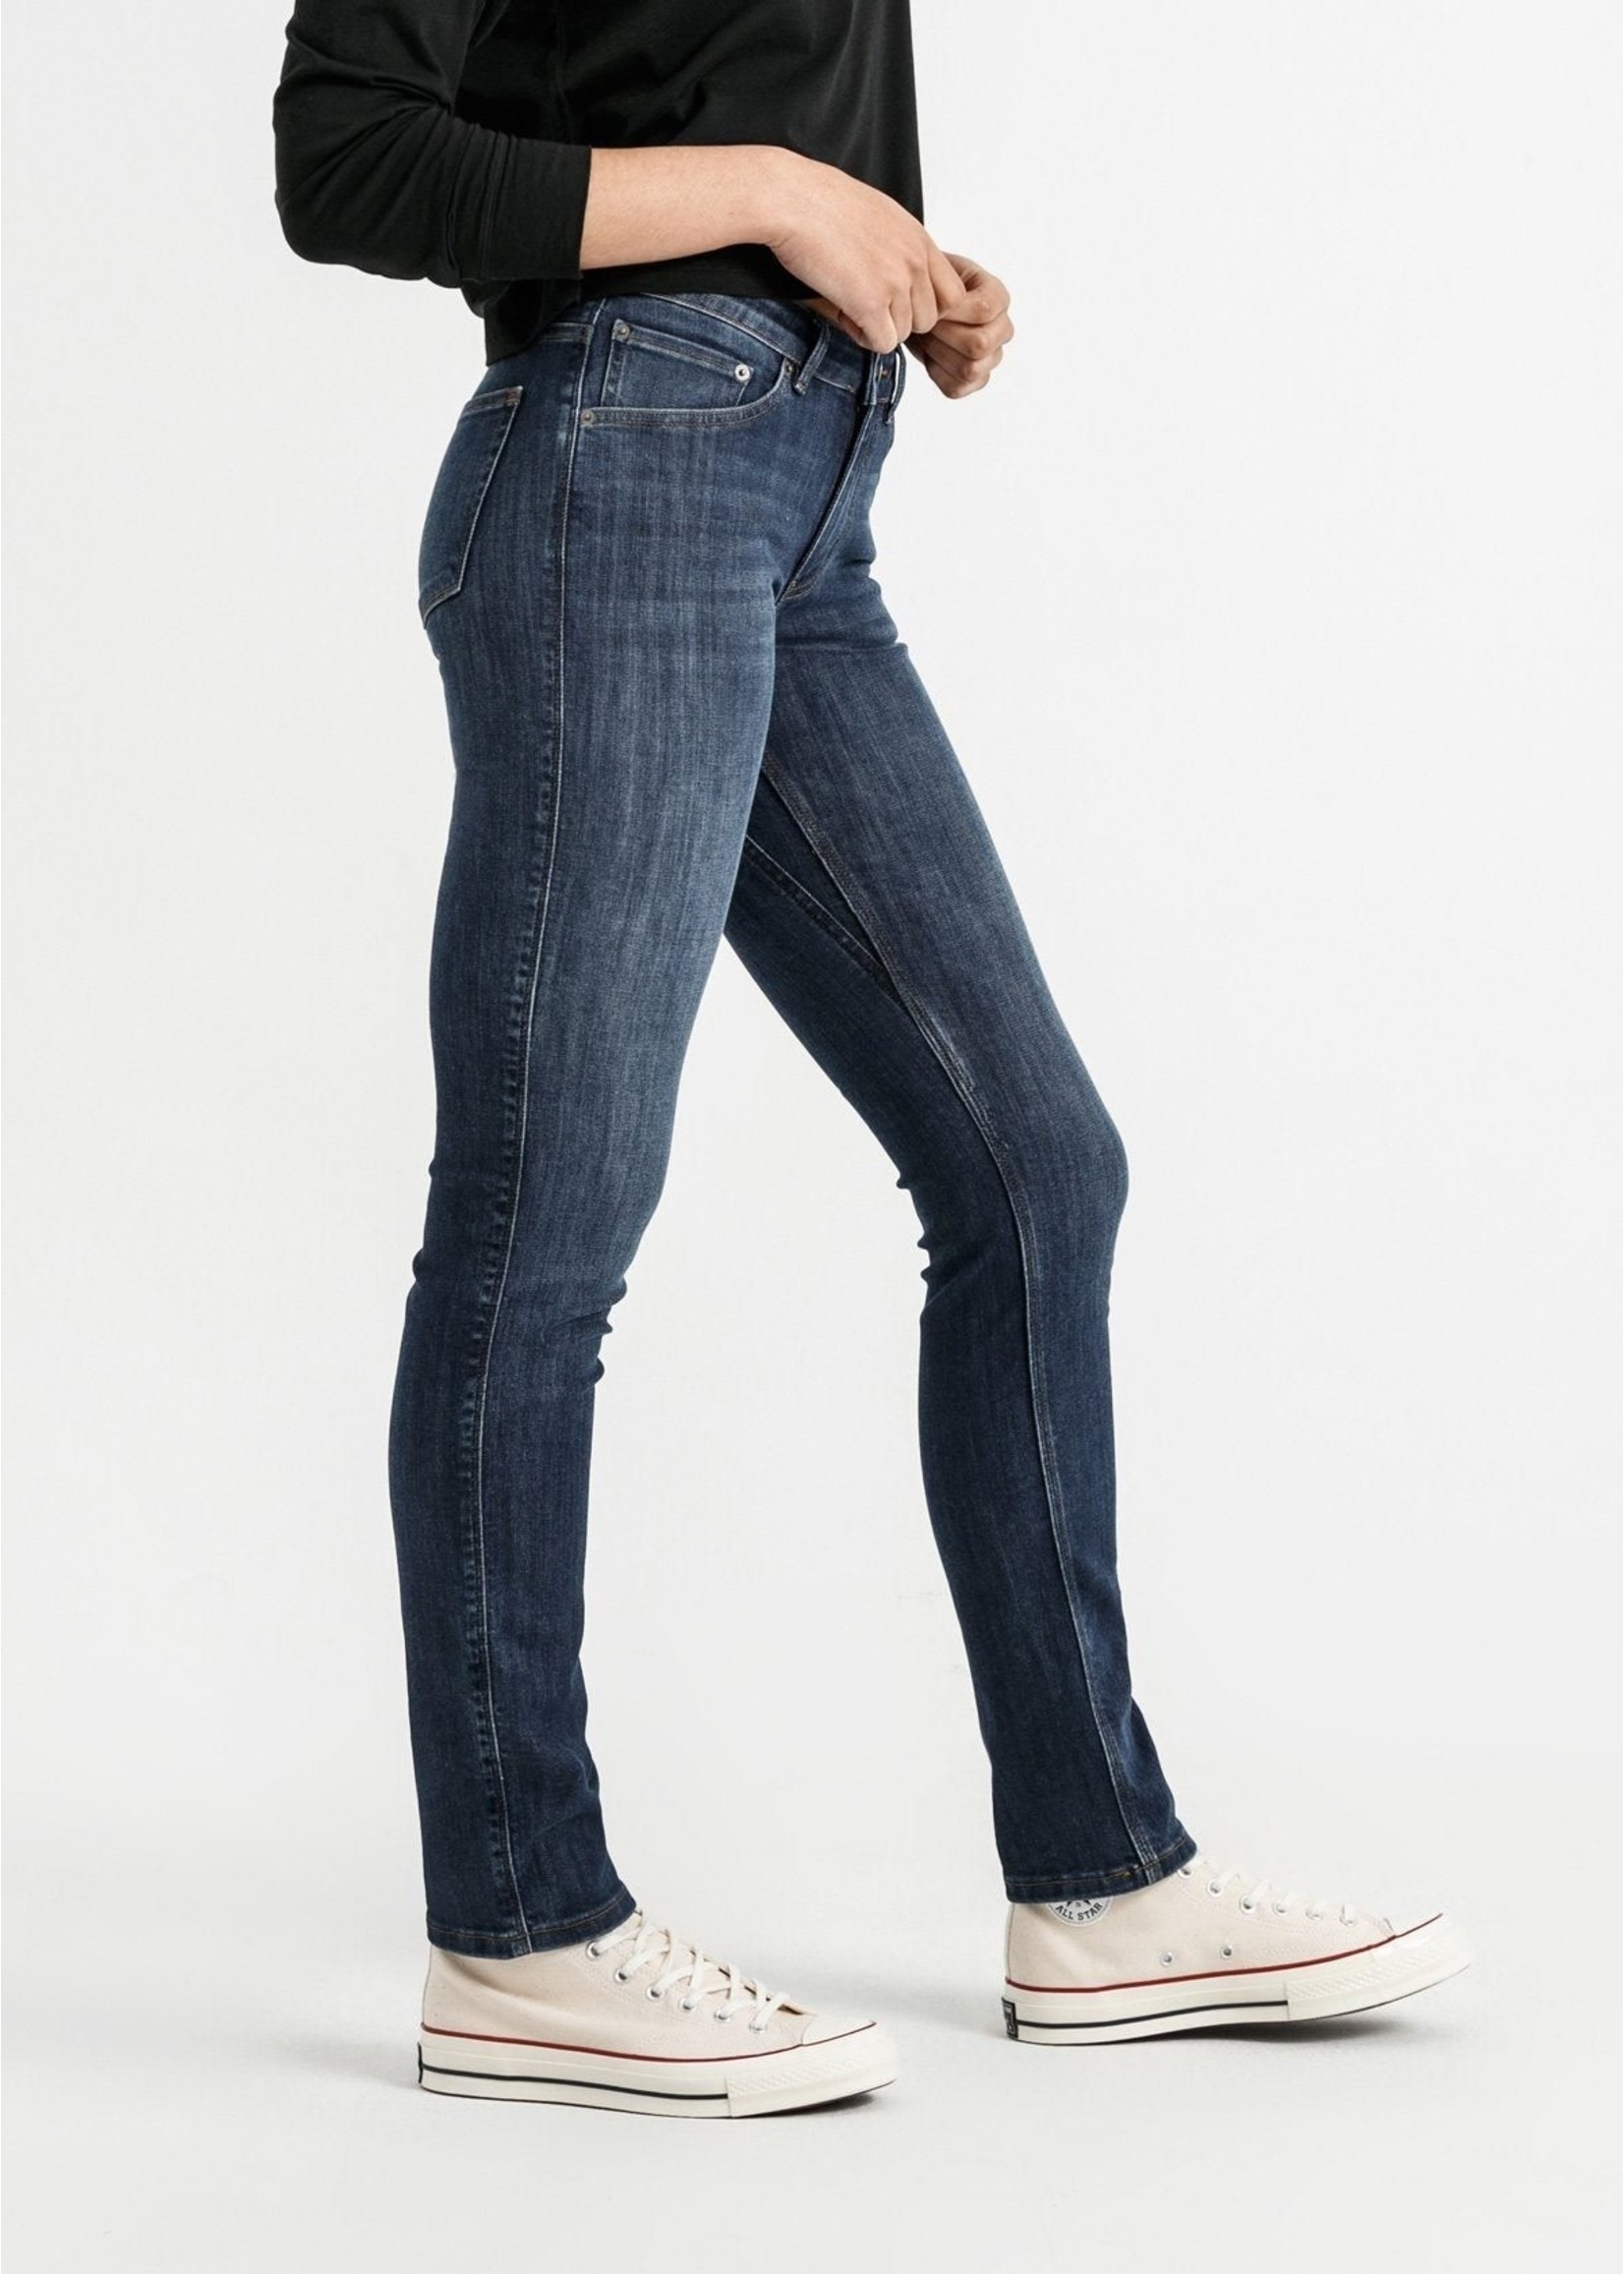 DUER Jeans Performance Denim Slim Straight par Duer-Femme